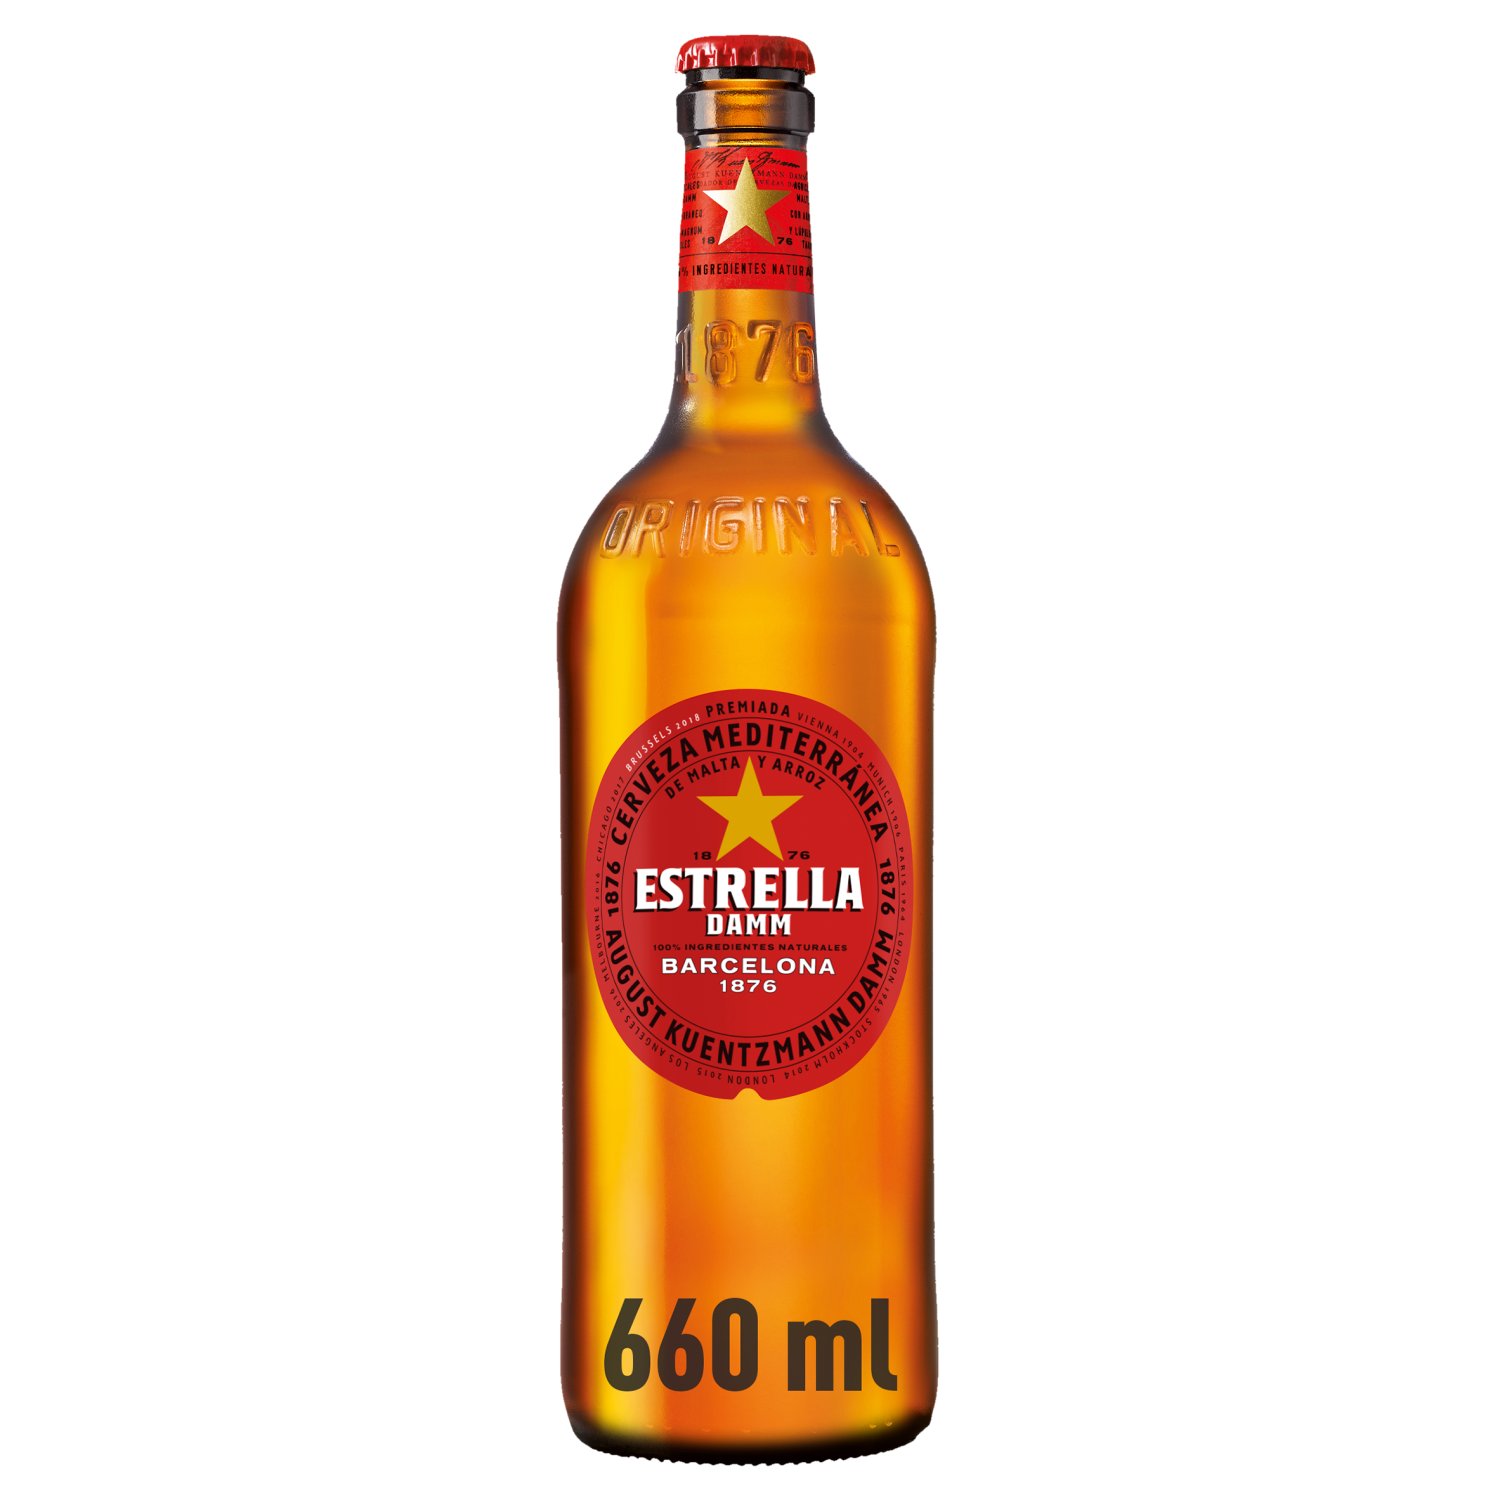 Estrella Damm (660 ml)